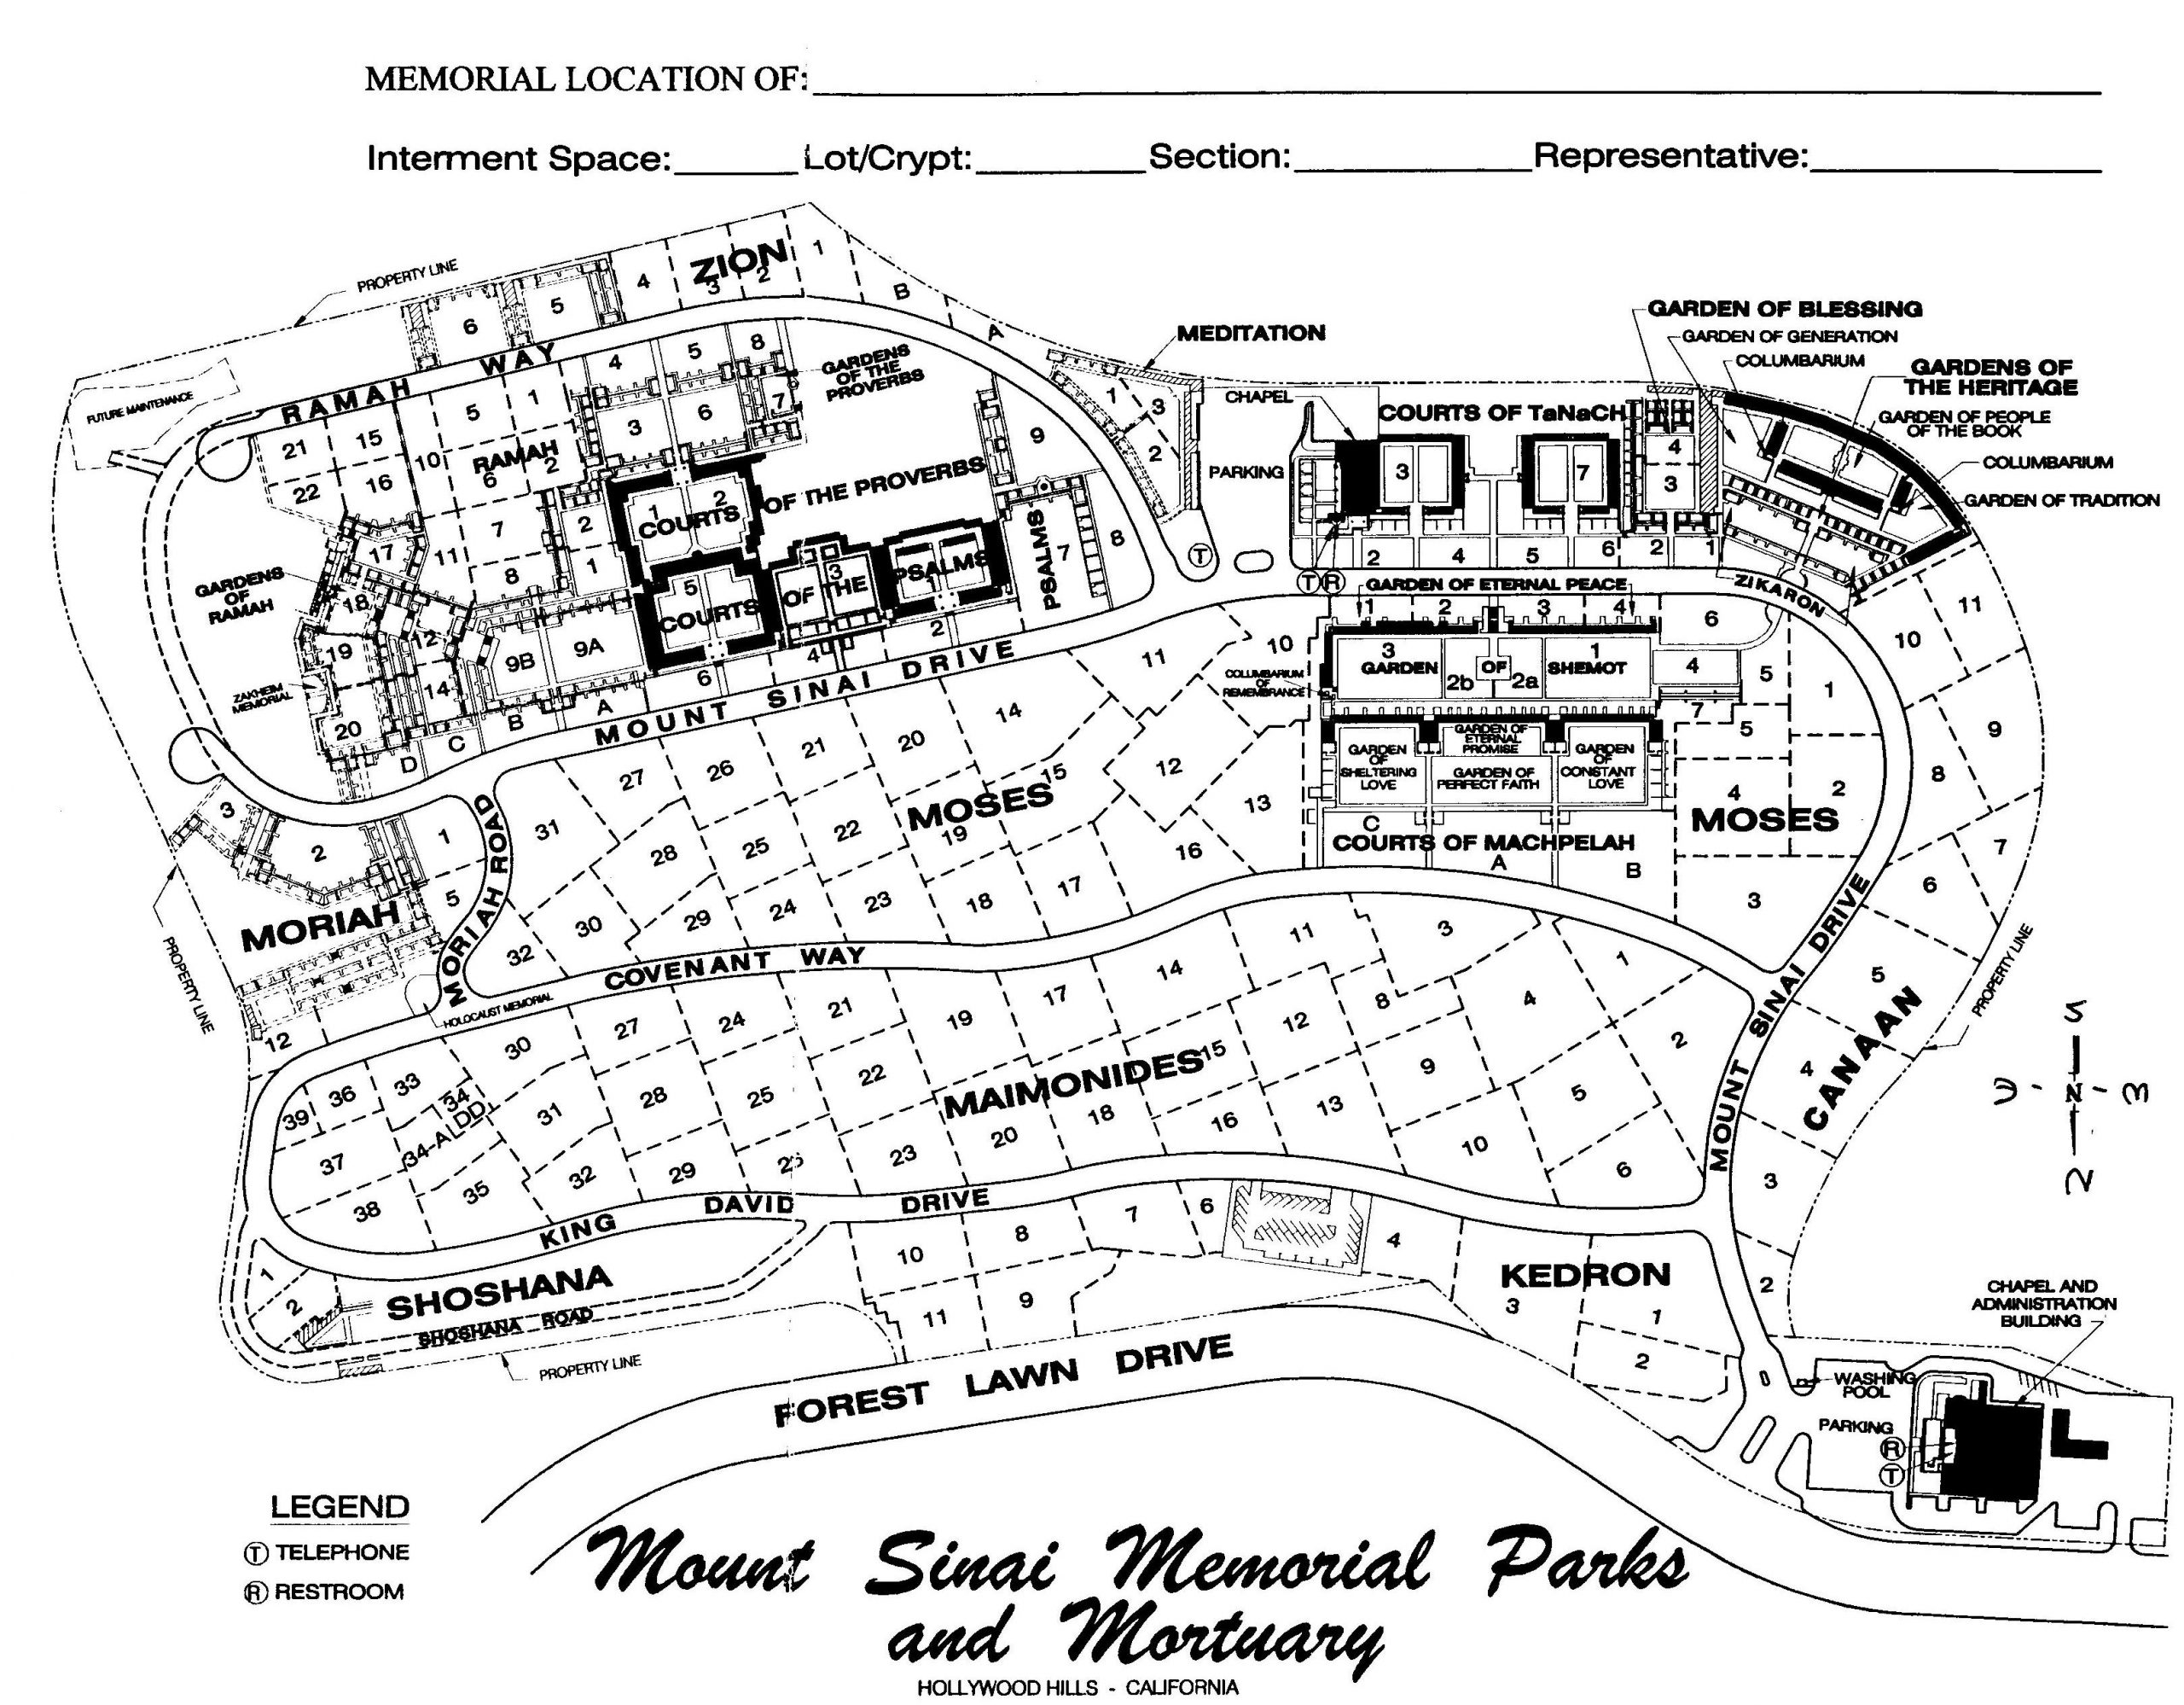 Cemetery map of Mt. Sinai Memorial Park in Los Angeles, California.